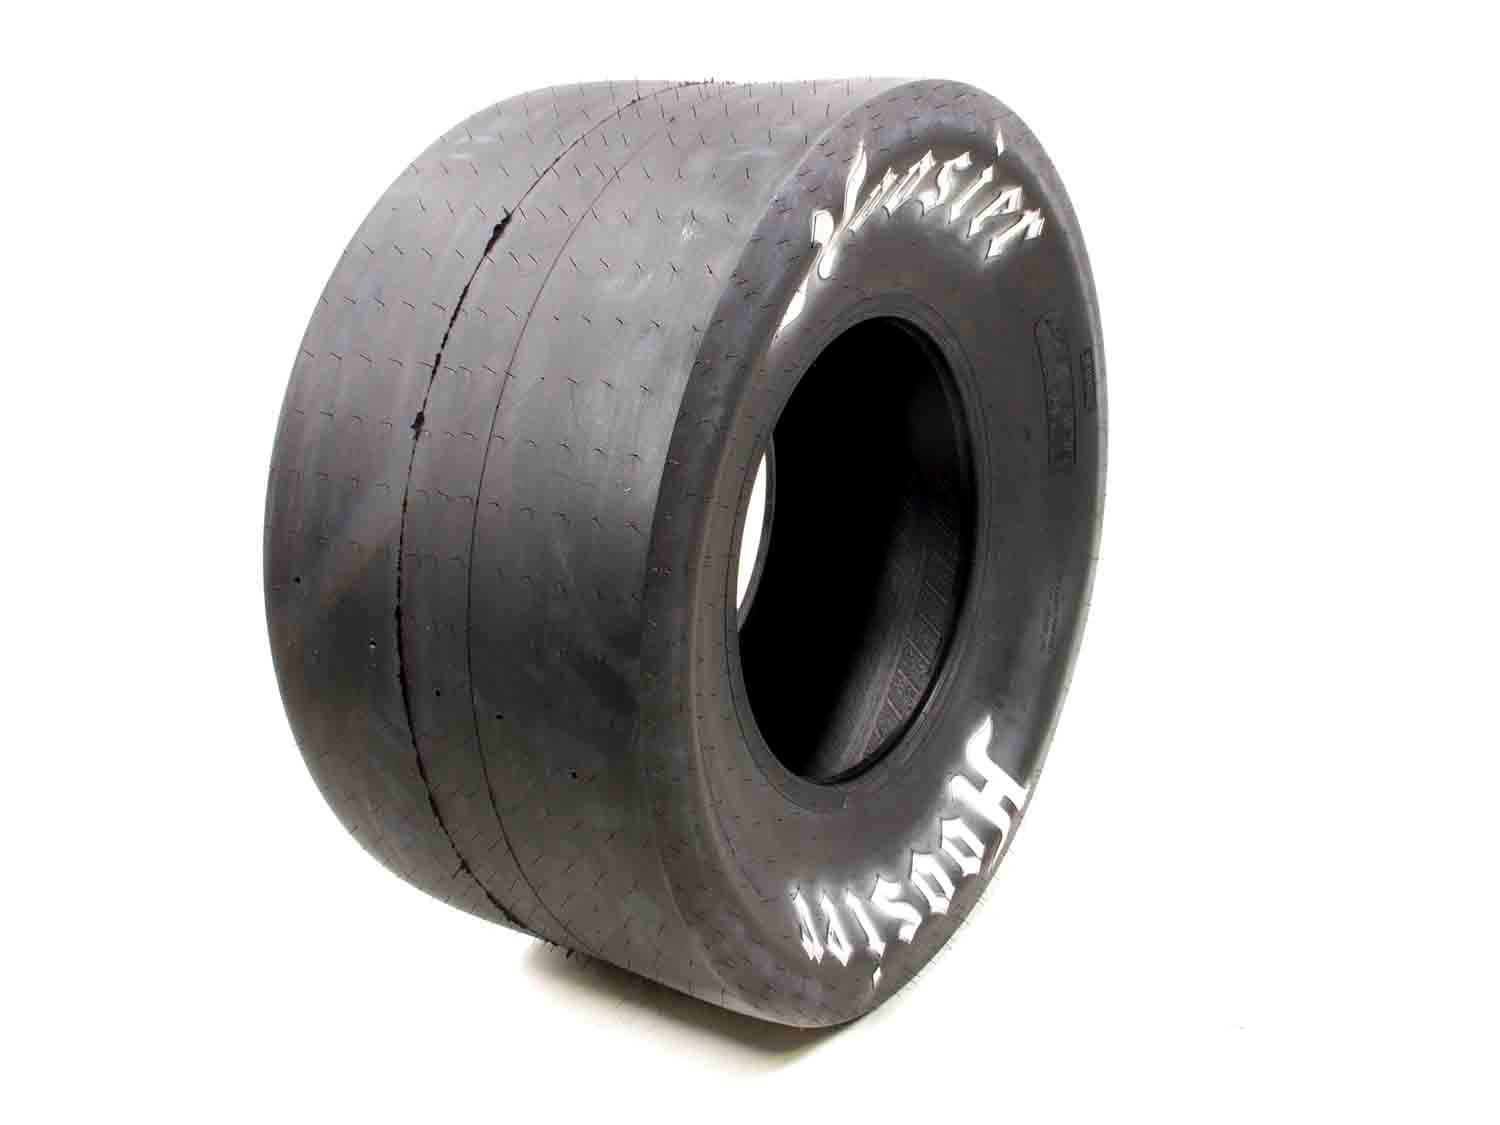 28.0/9-15 Drag Tire - Burlile Performance Products